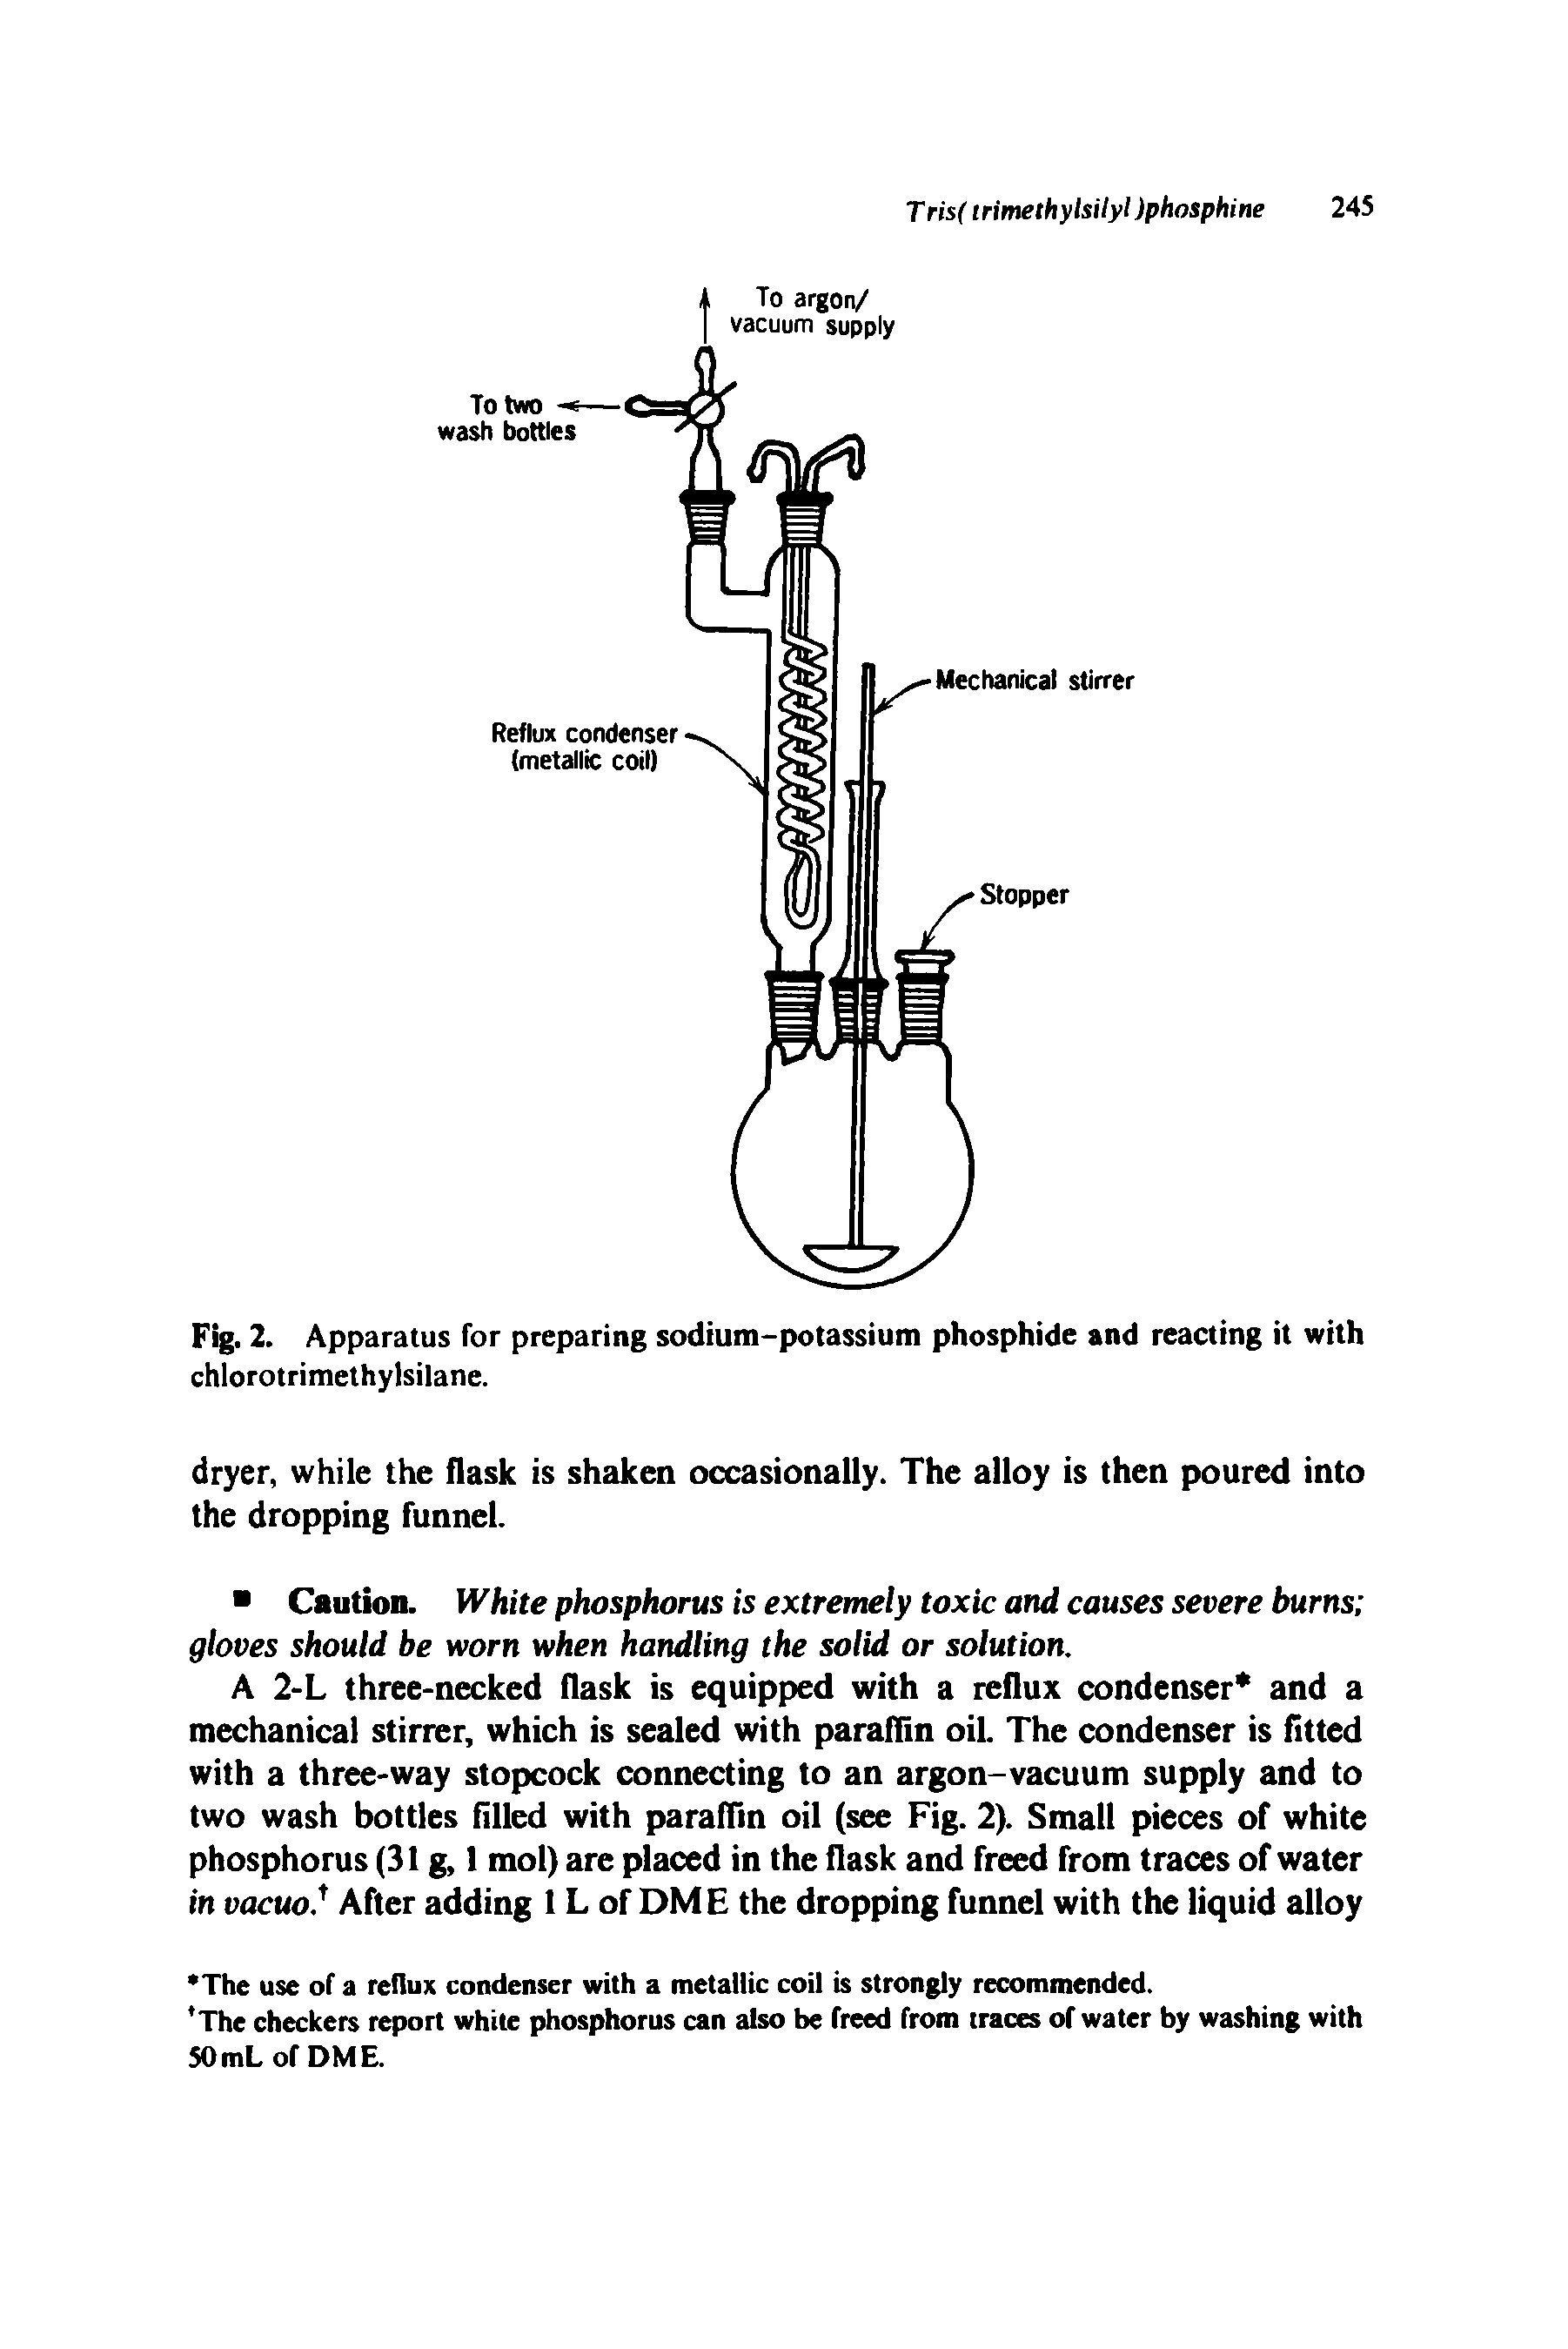 Fig. 2. Apparatus for preparing sodium-potassium phosphide and reacting it with chlorotrimethylsilane.